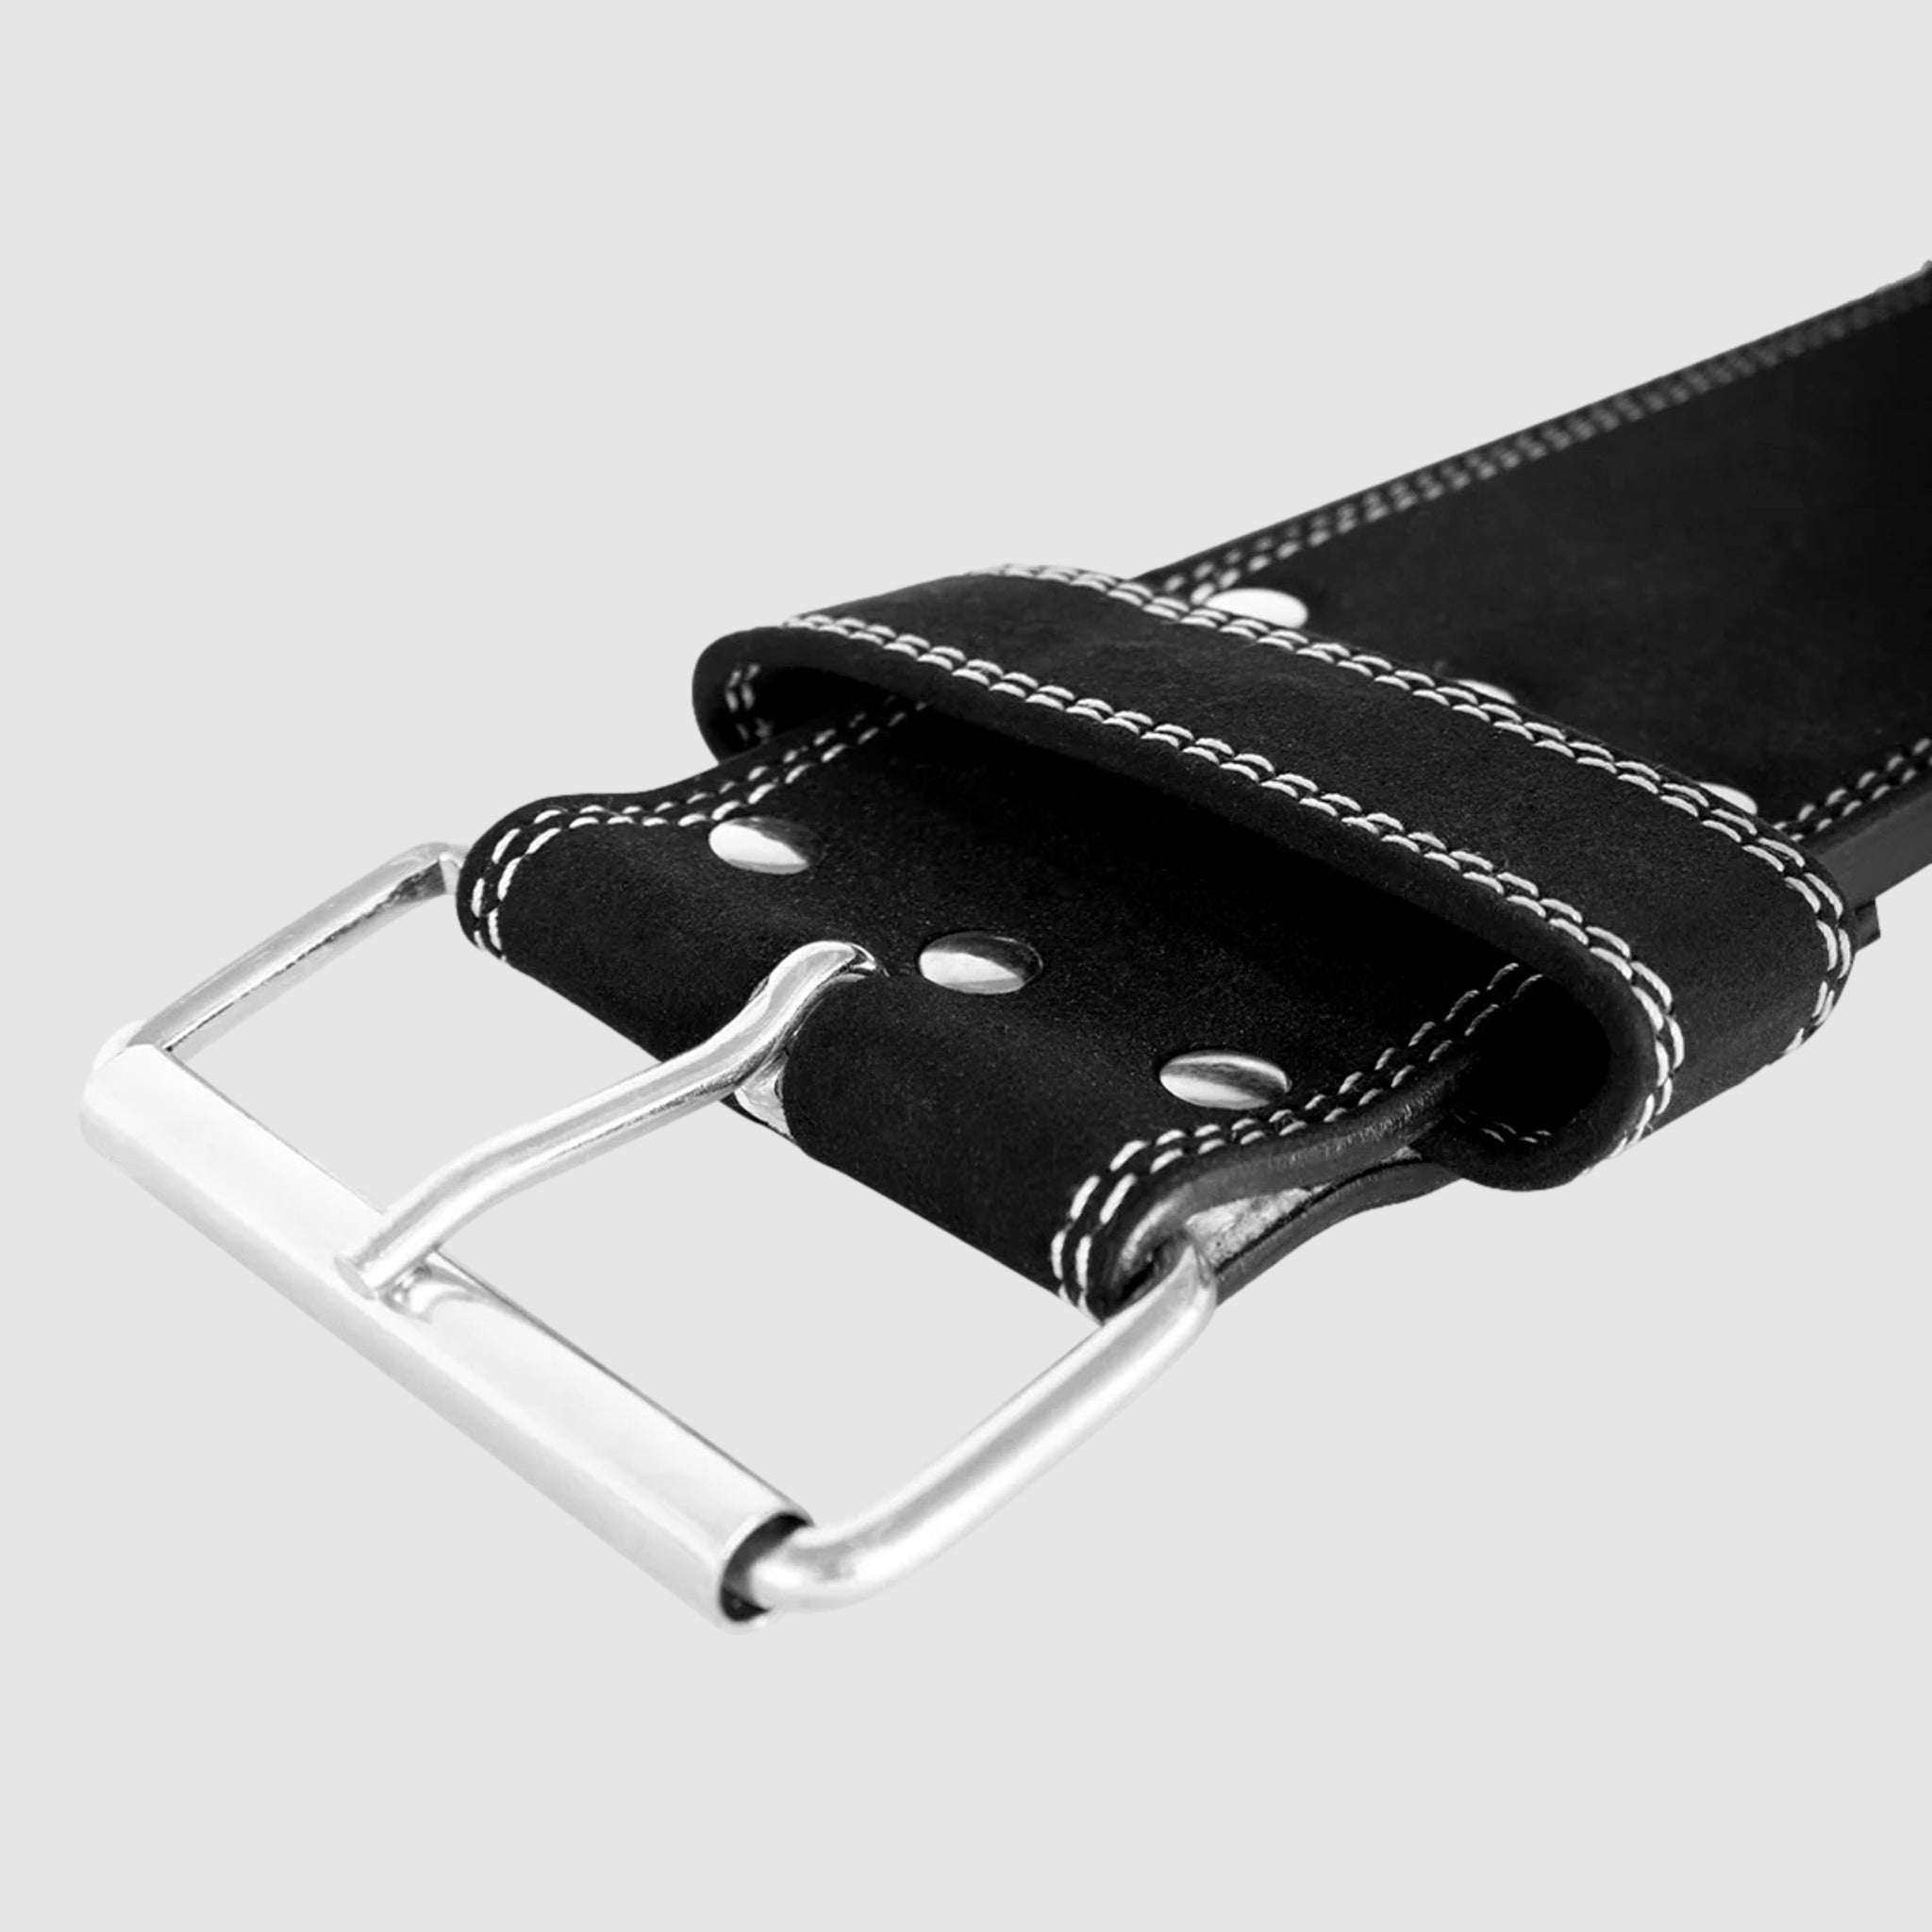 13MM Single Prong Belt - Black - IPF Approved - Strength Shop USA